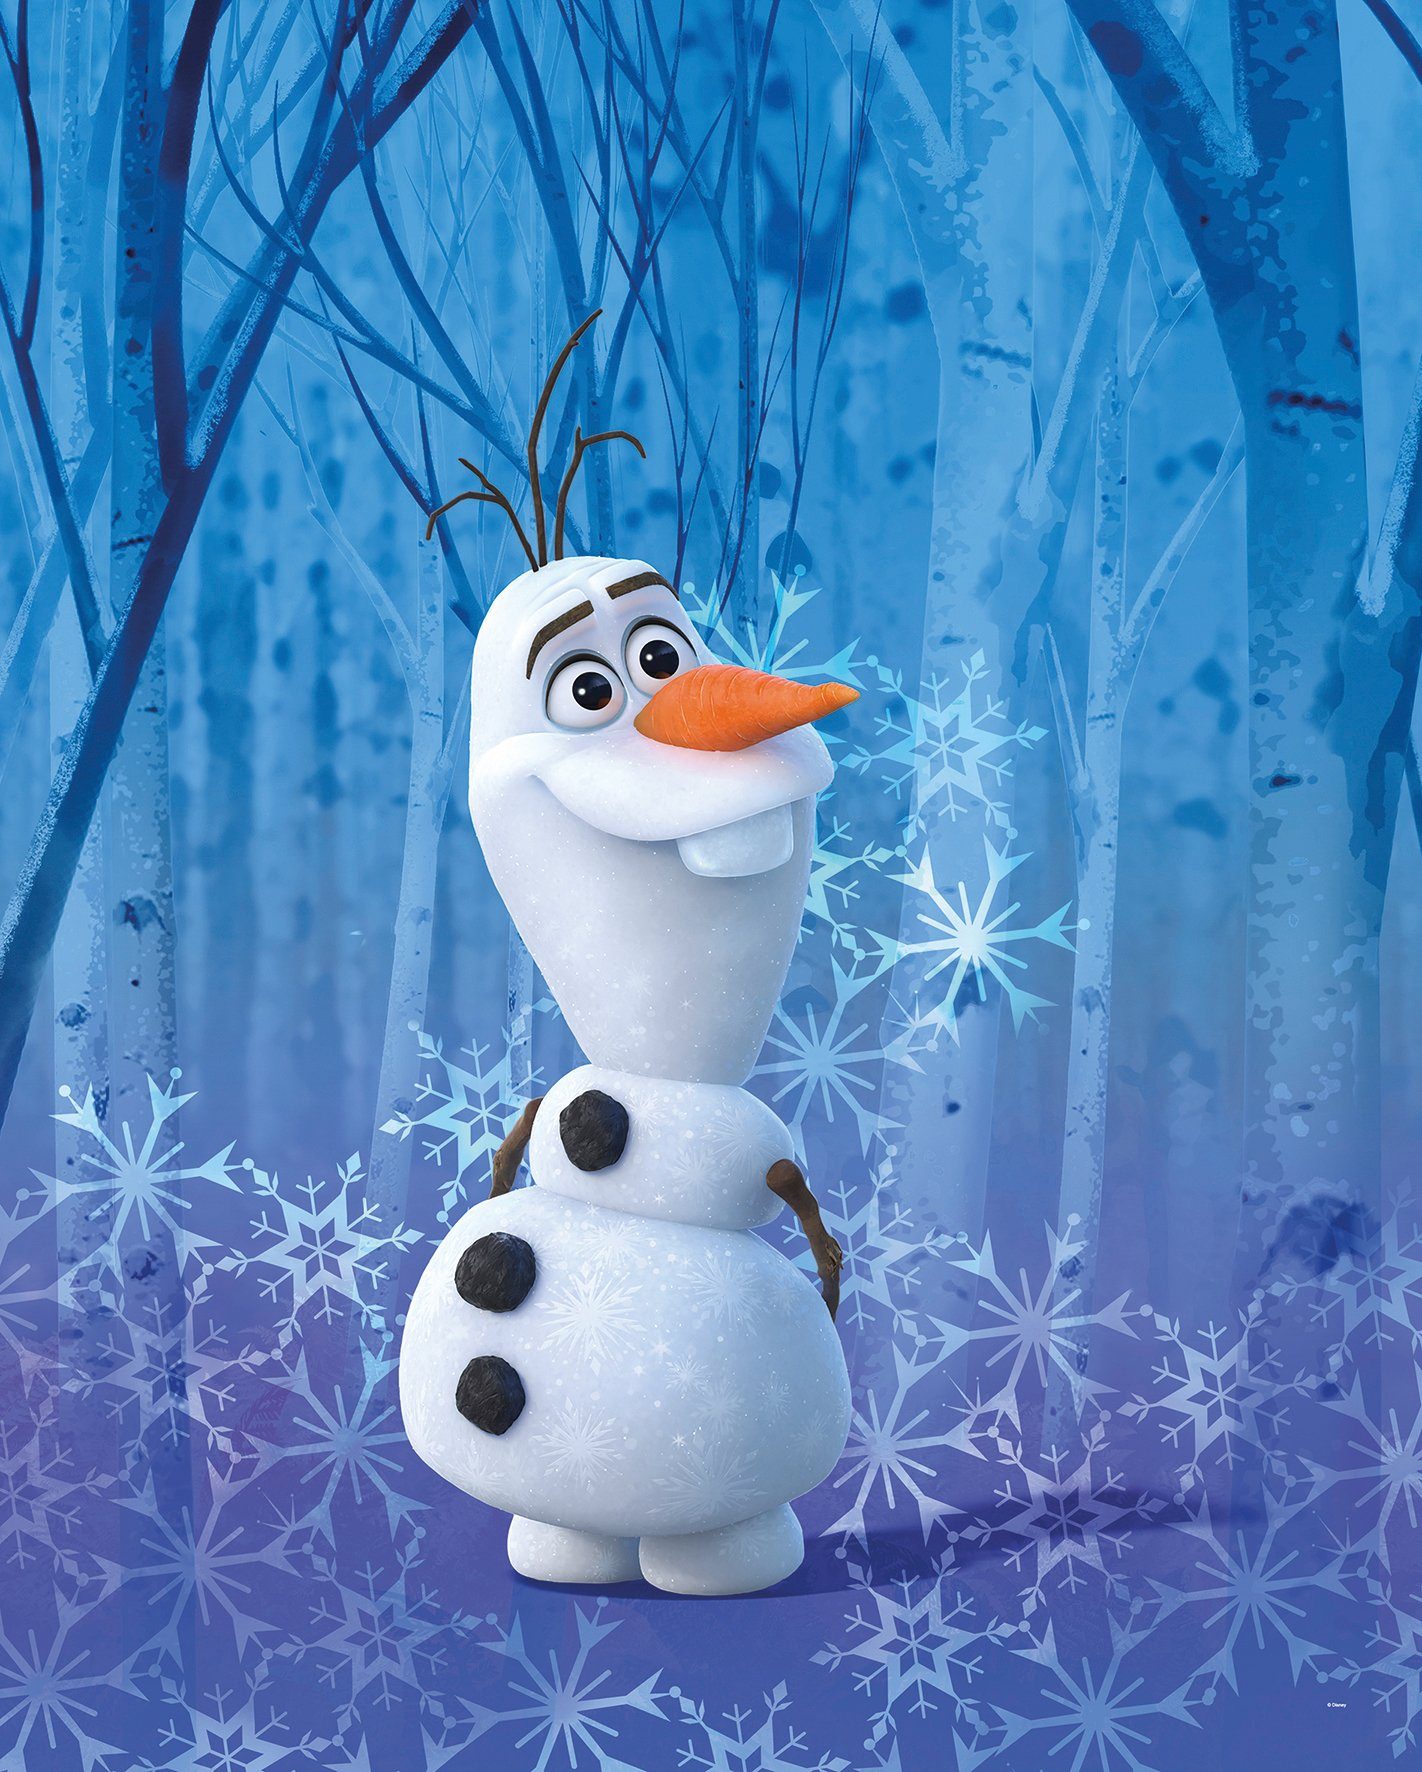 Komar Poster Frozen Olaf crystal